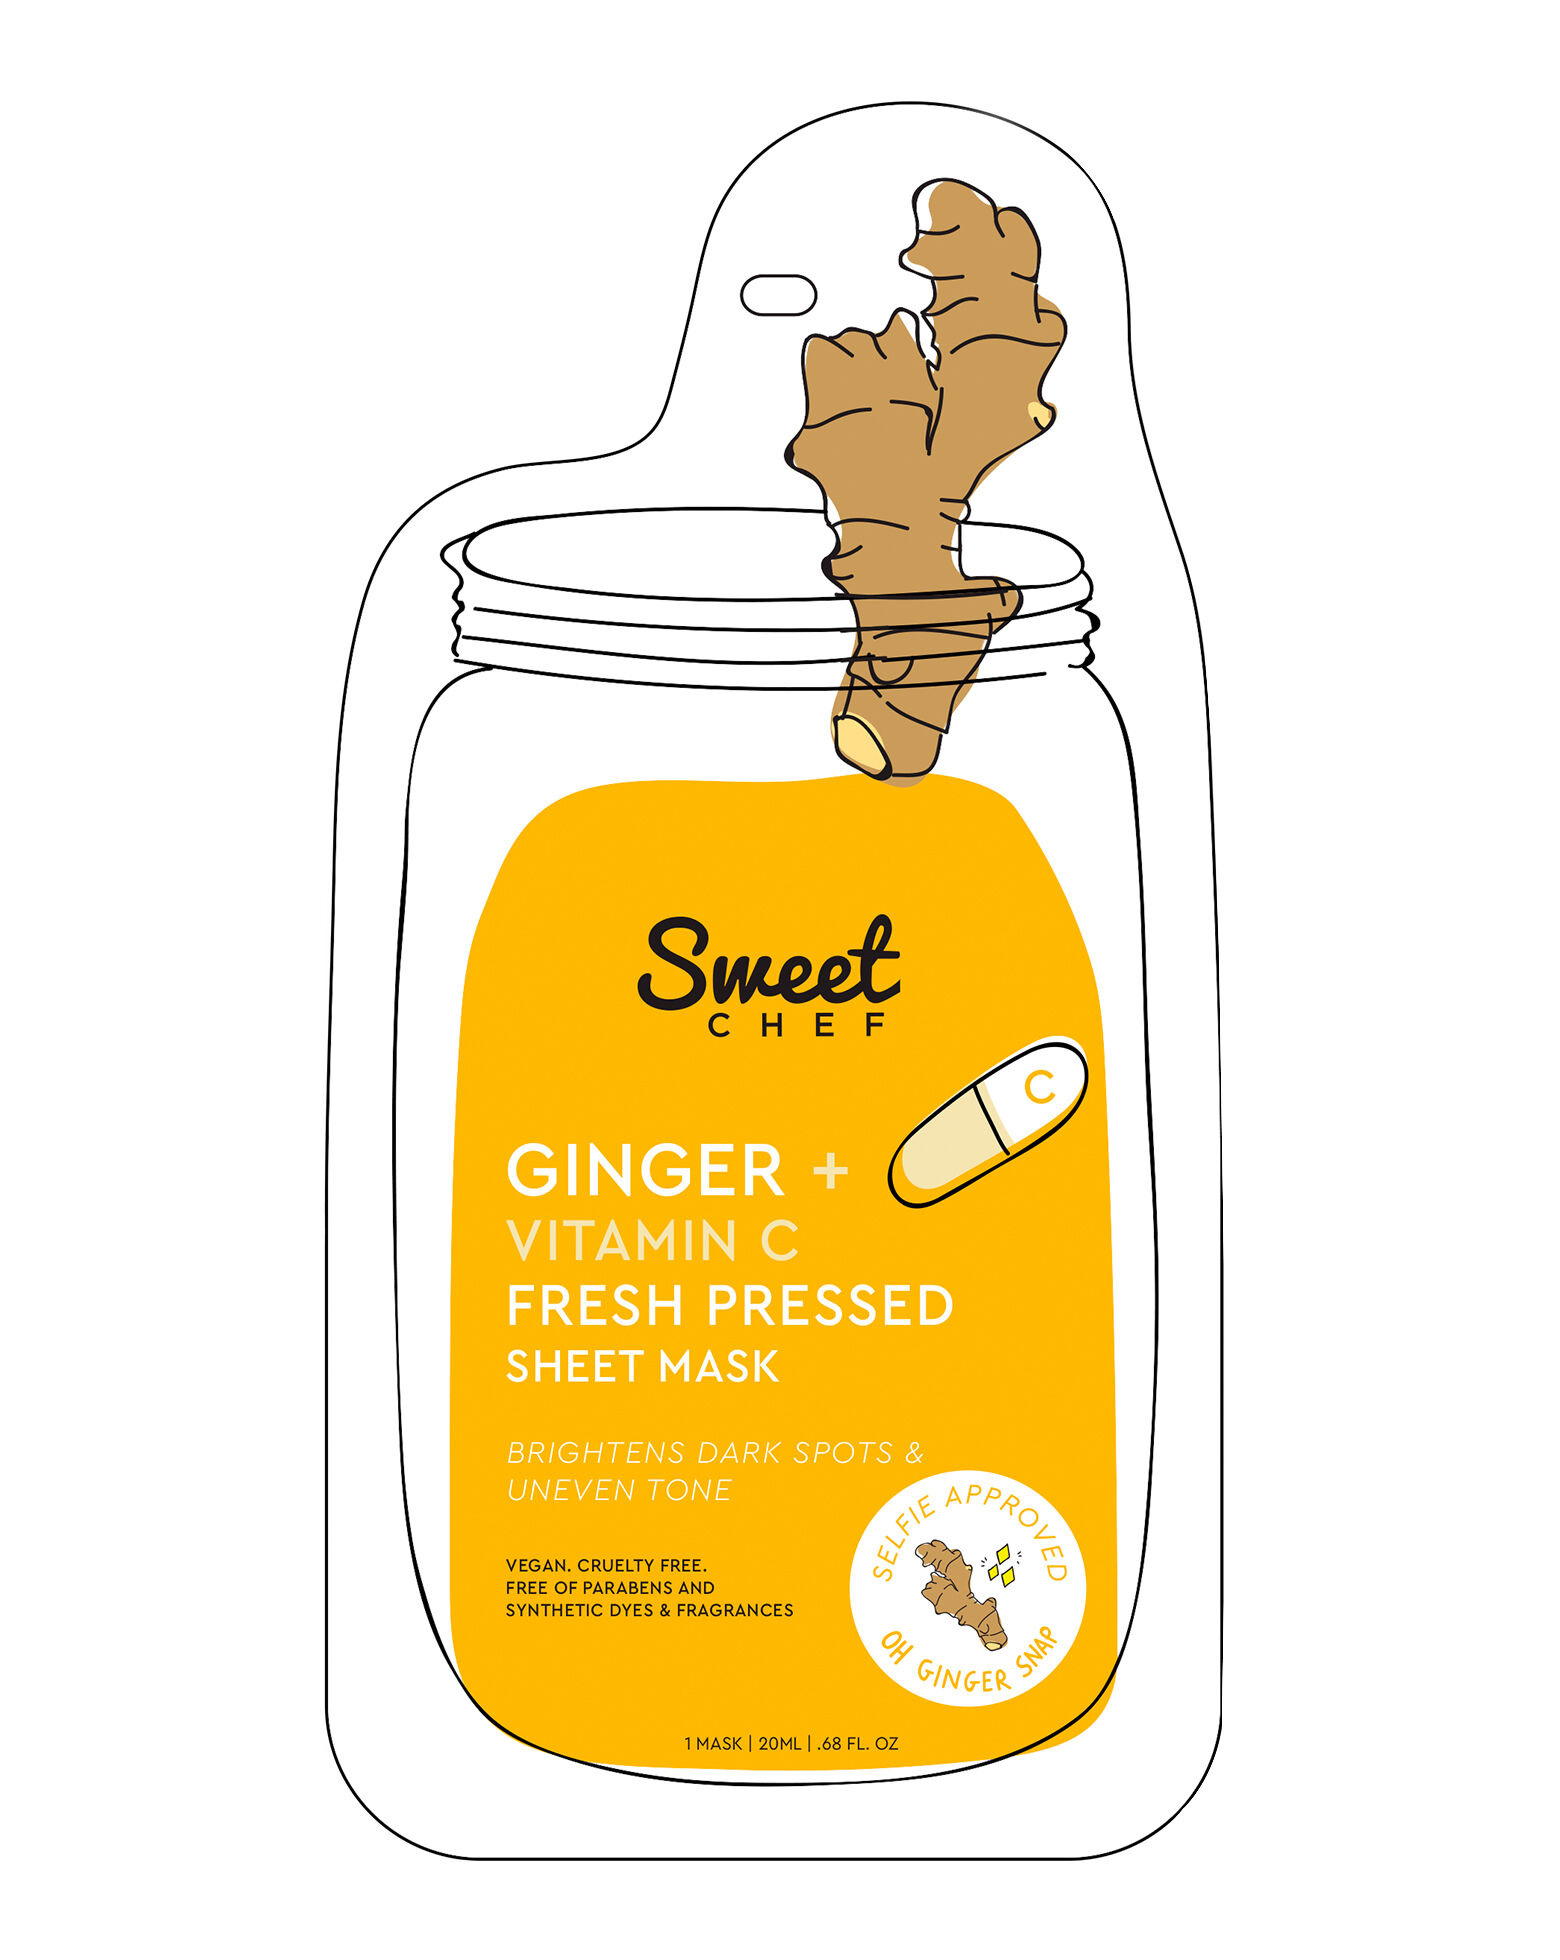 Sweet Chef - Ginger + Vitamin C Fresh Pressed Sheet Mask